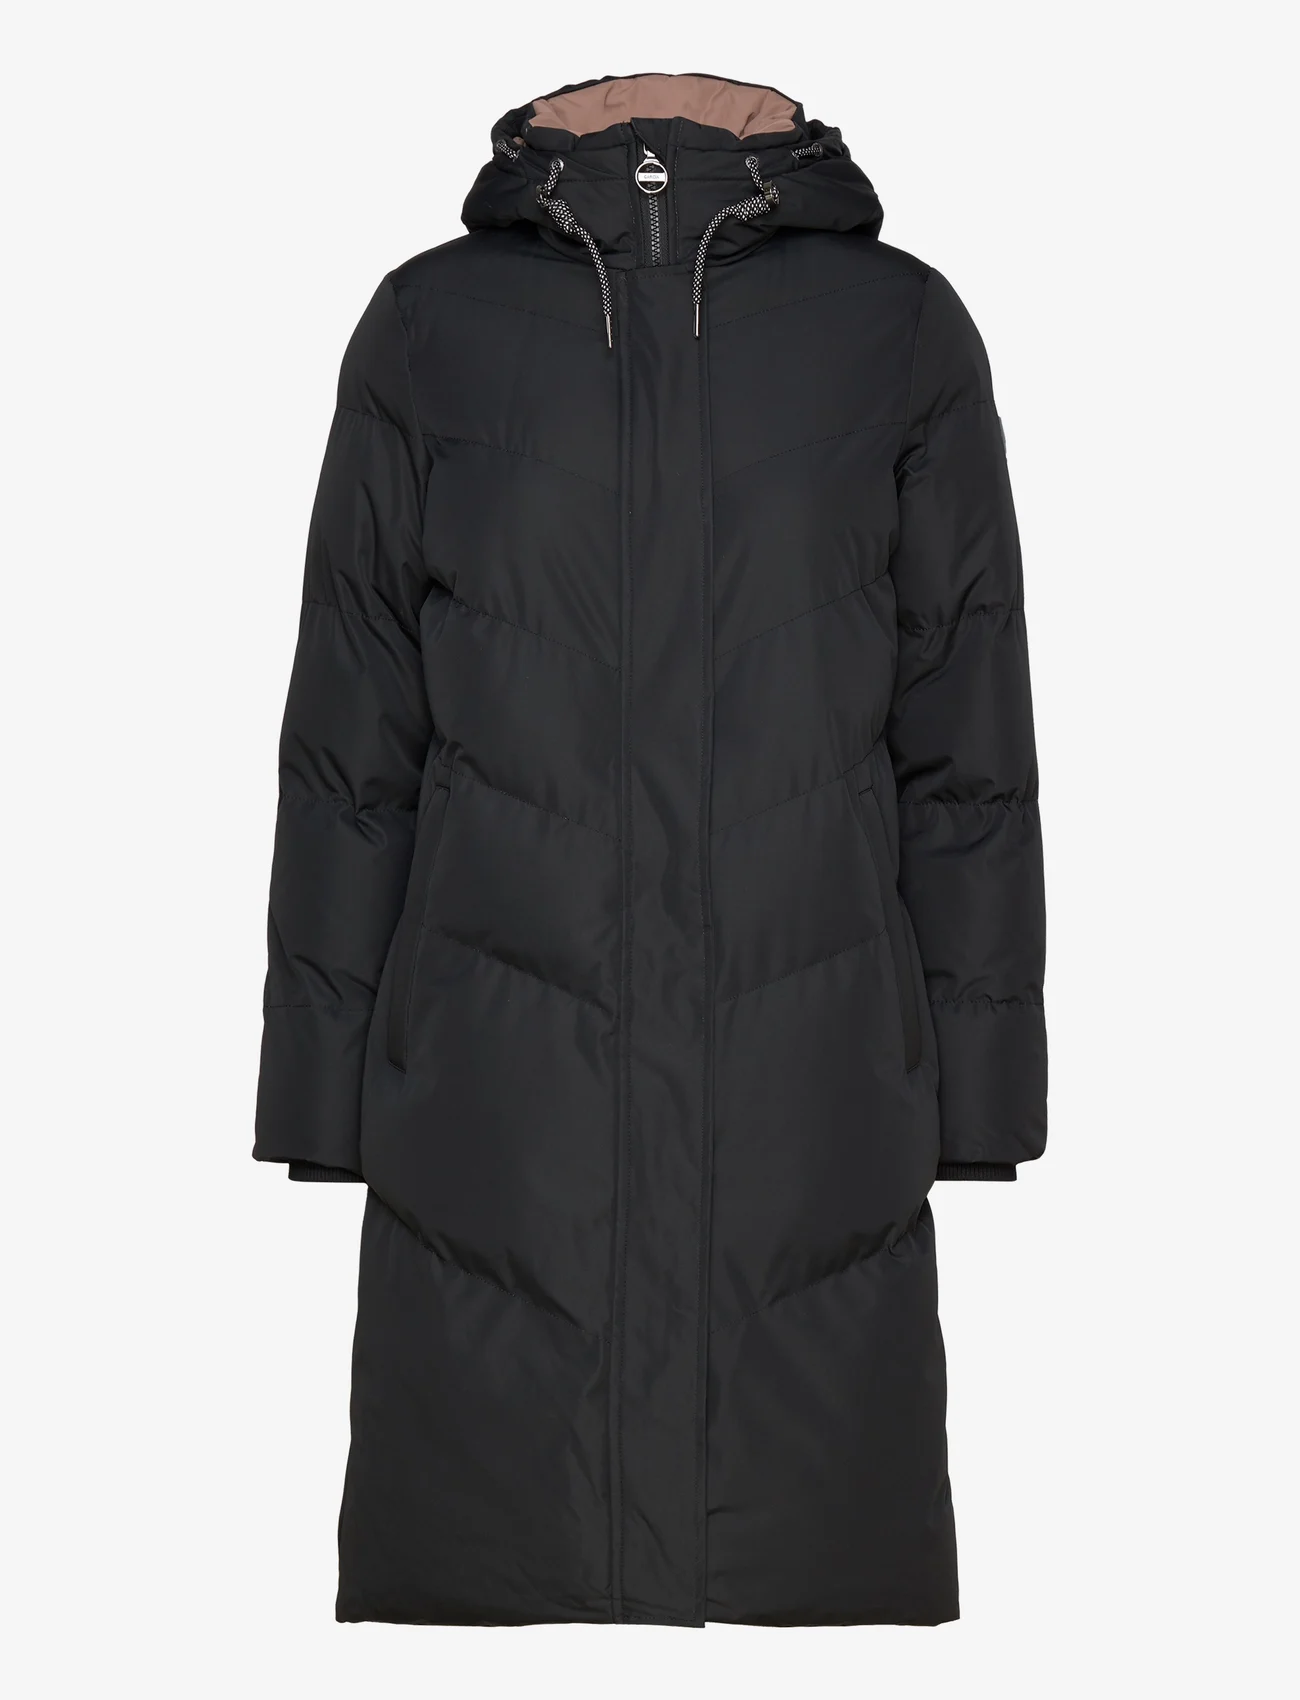 Garcia - ladies outdoor jackets - vinterjackor - black - 0